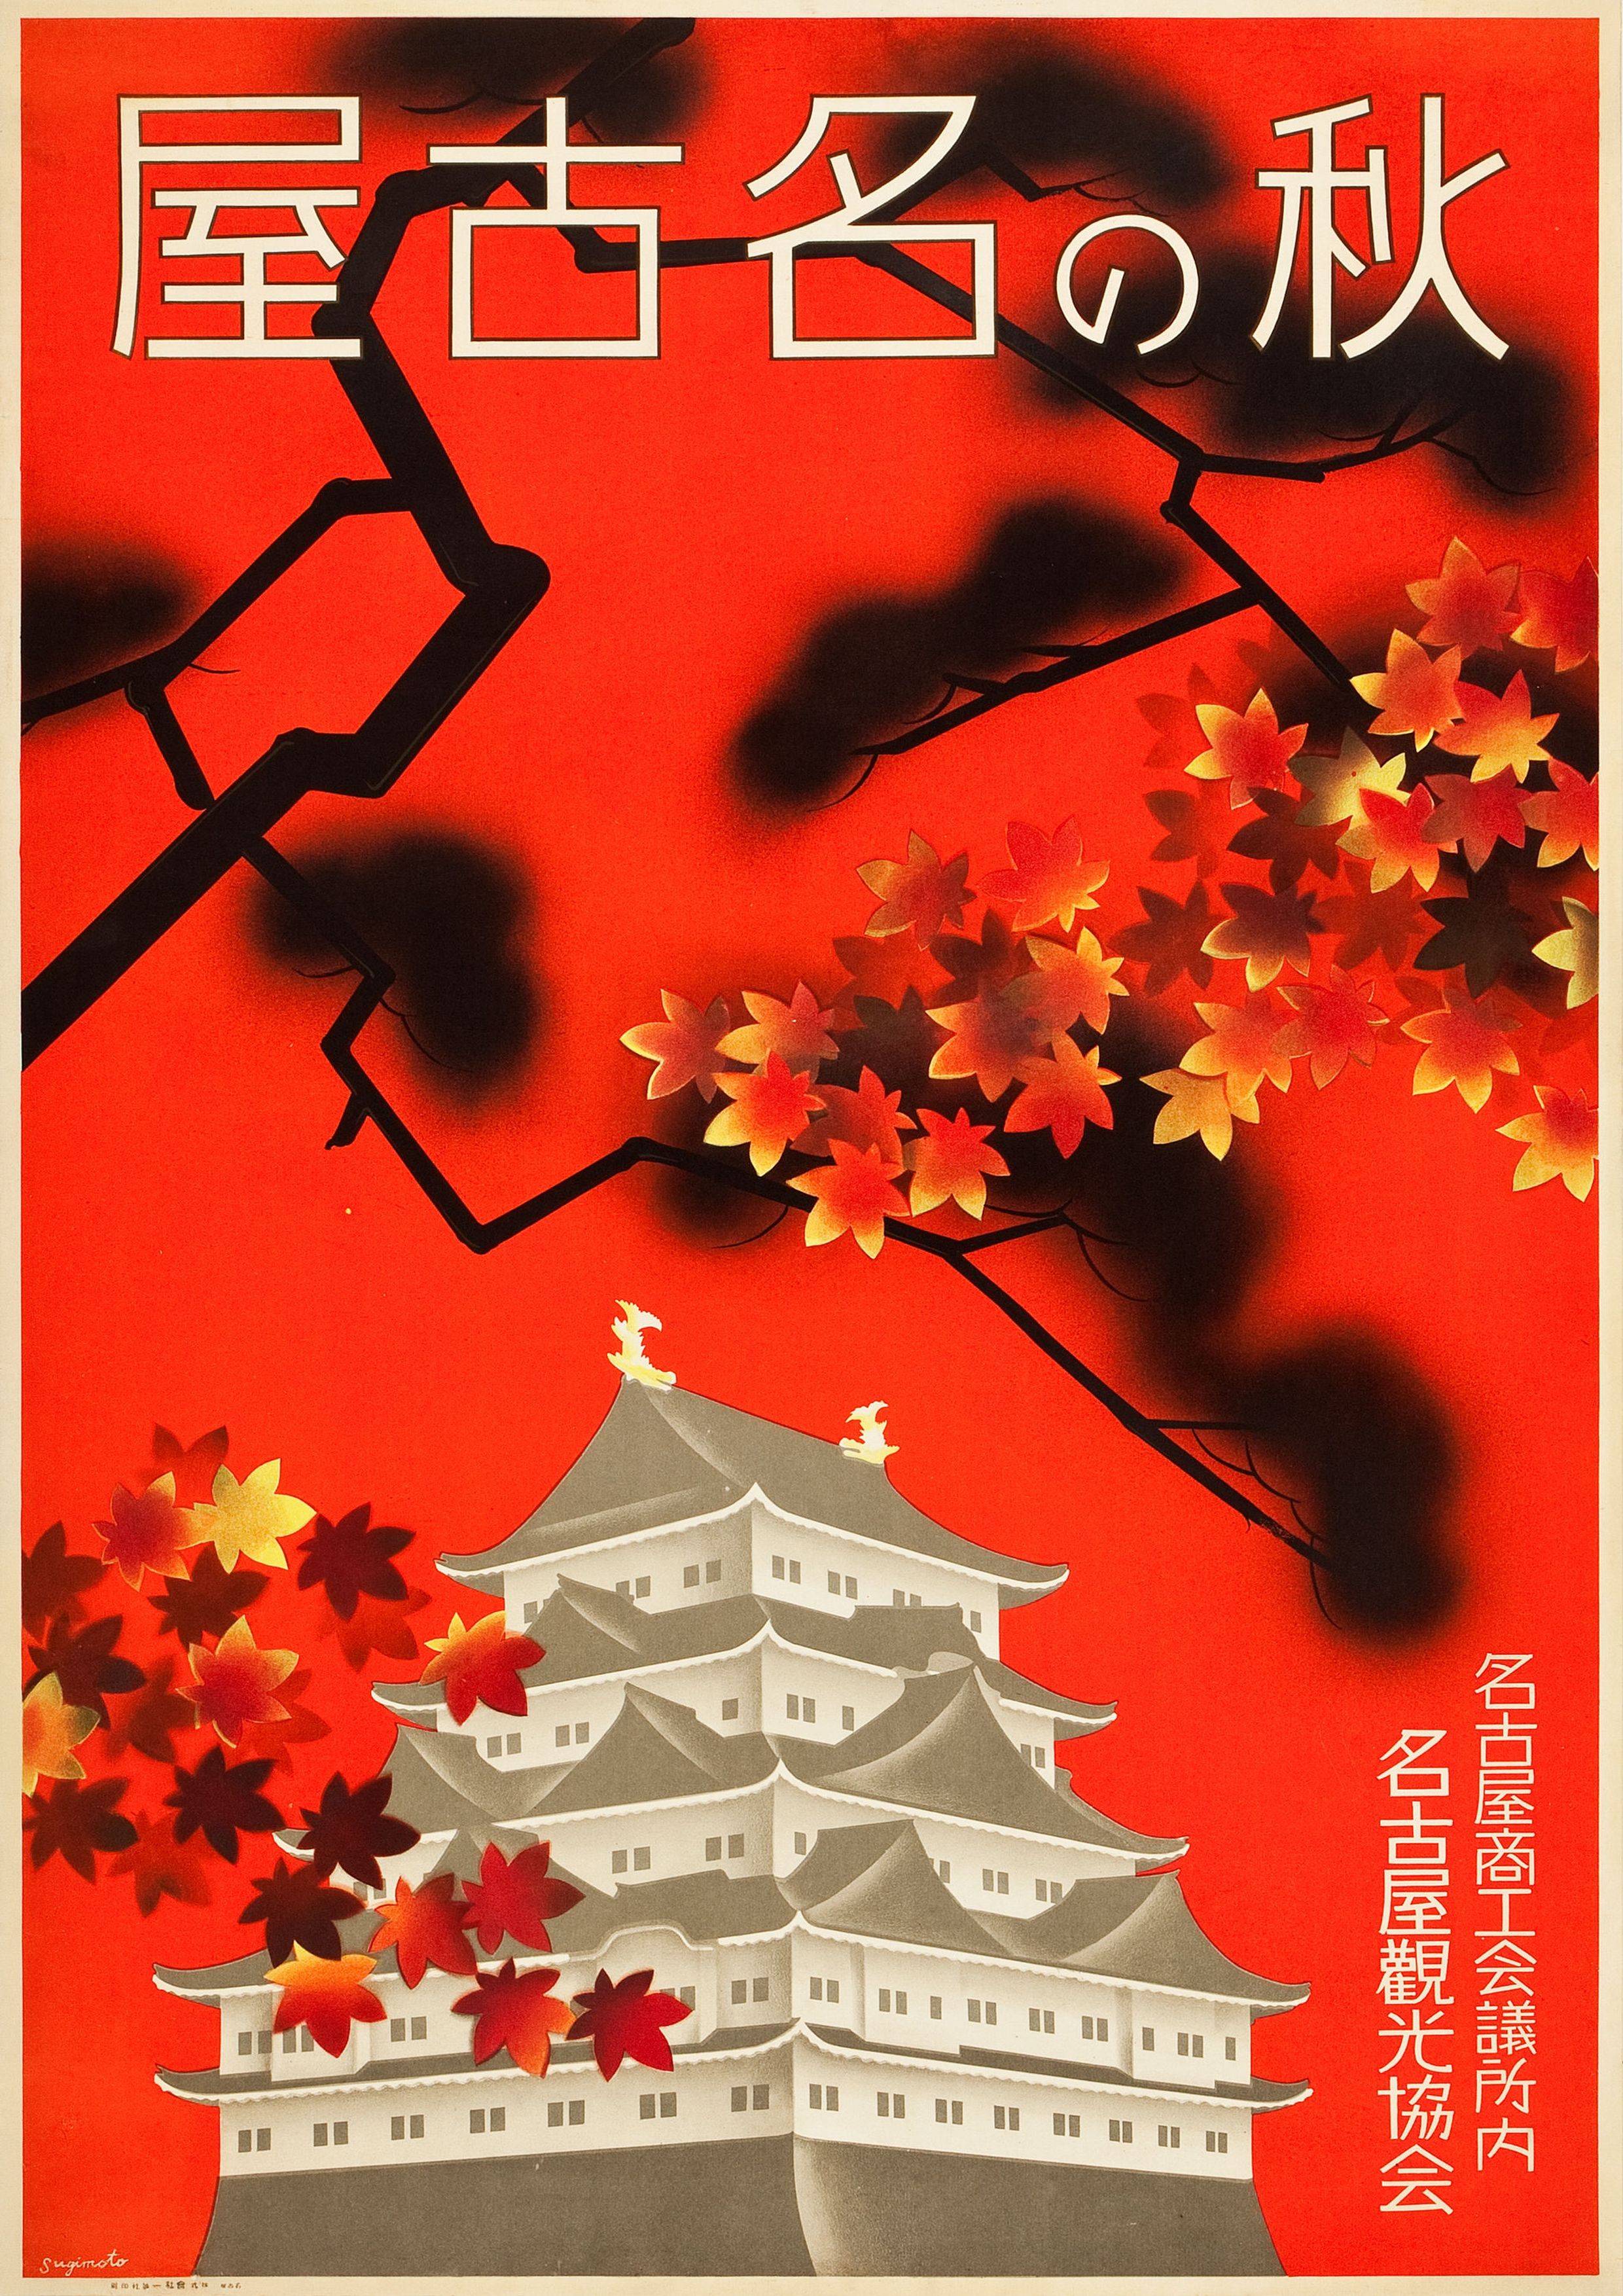 Asian Travel Poster